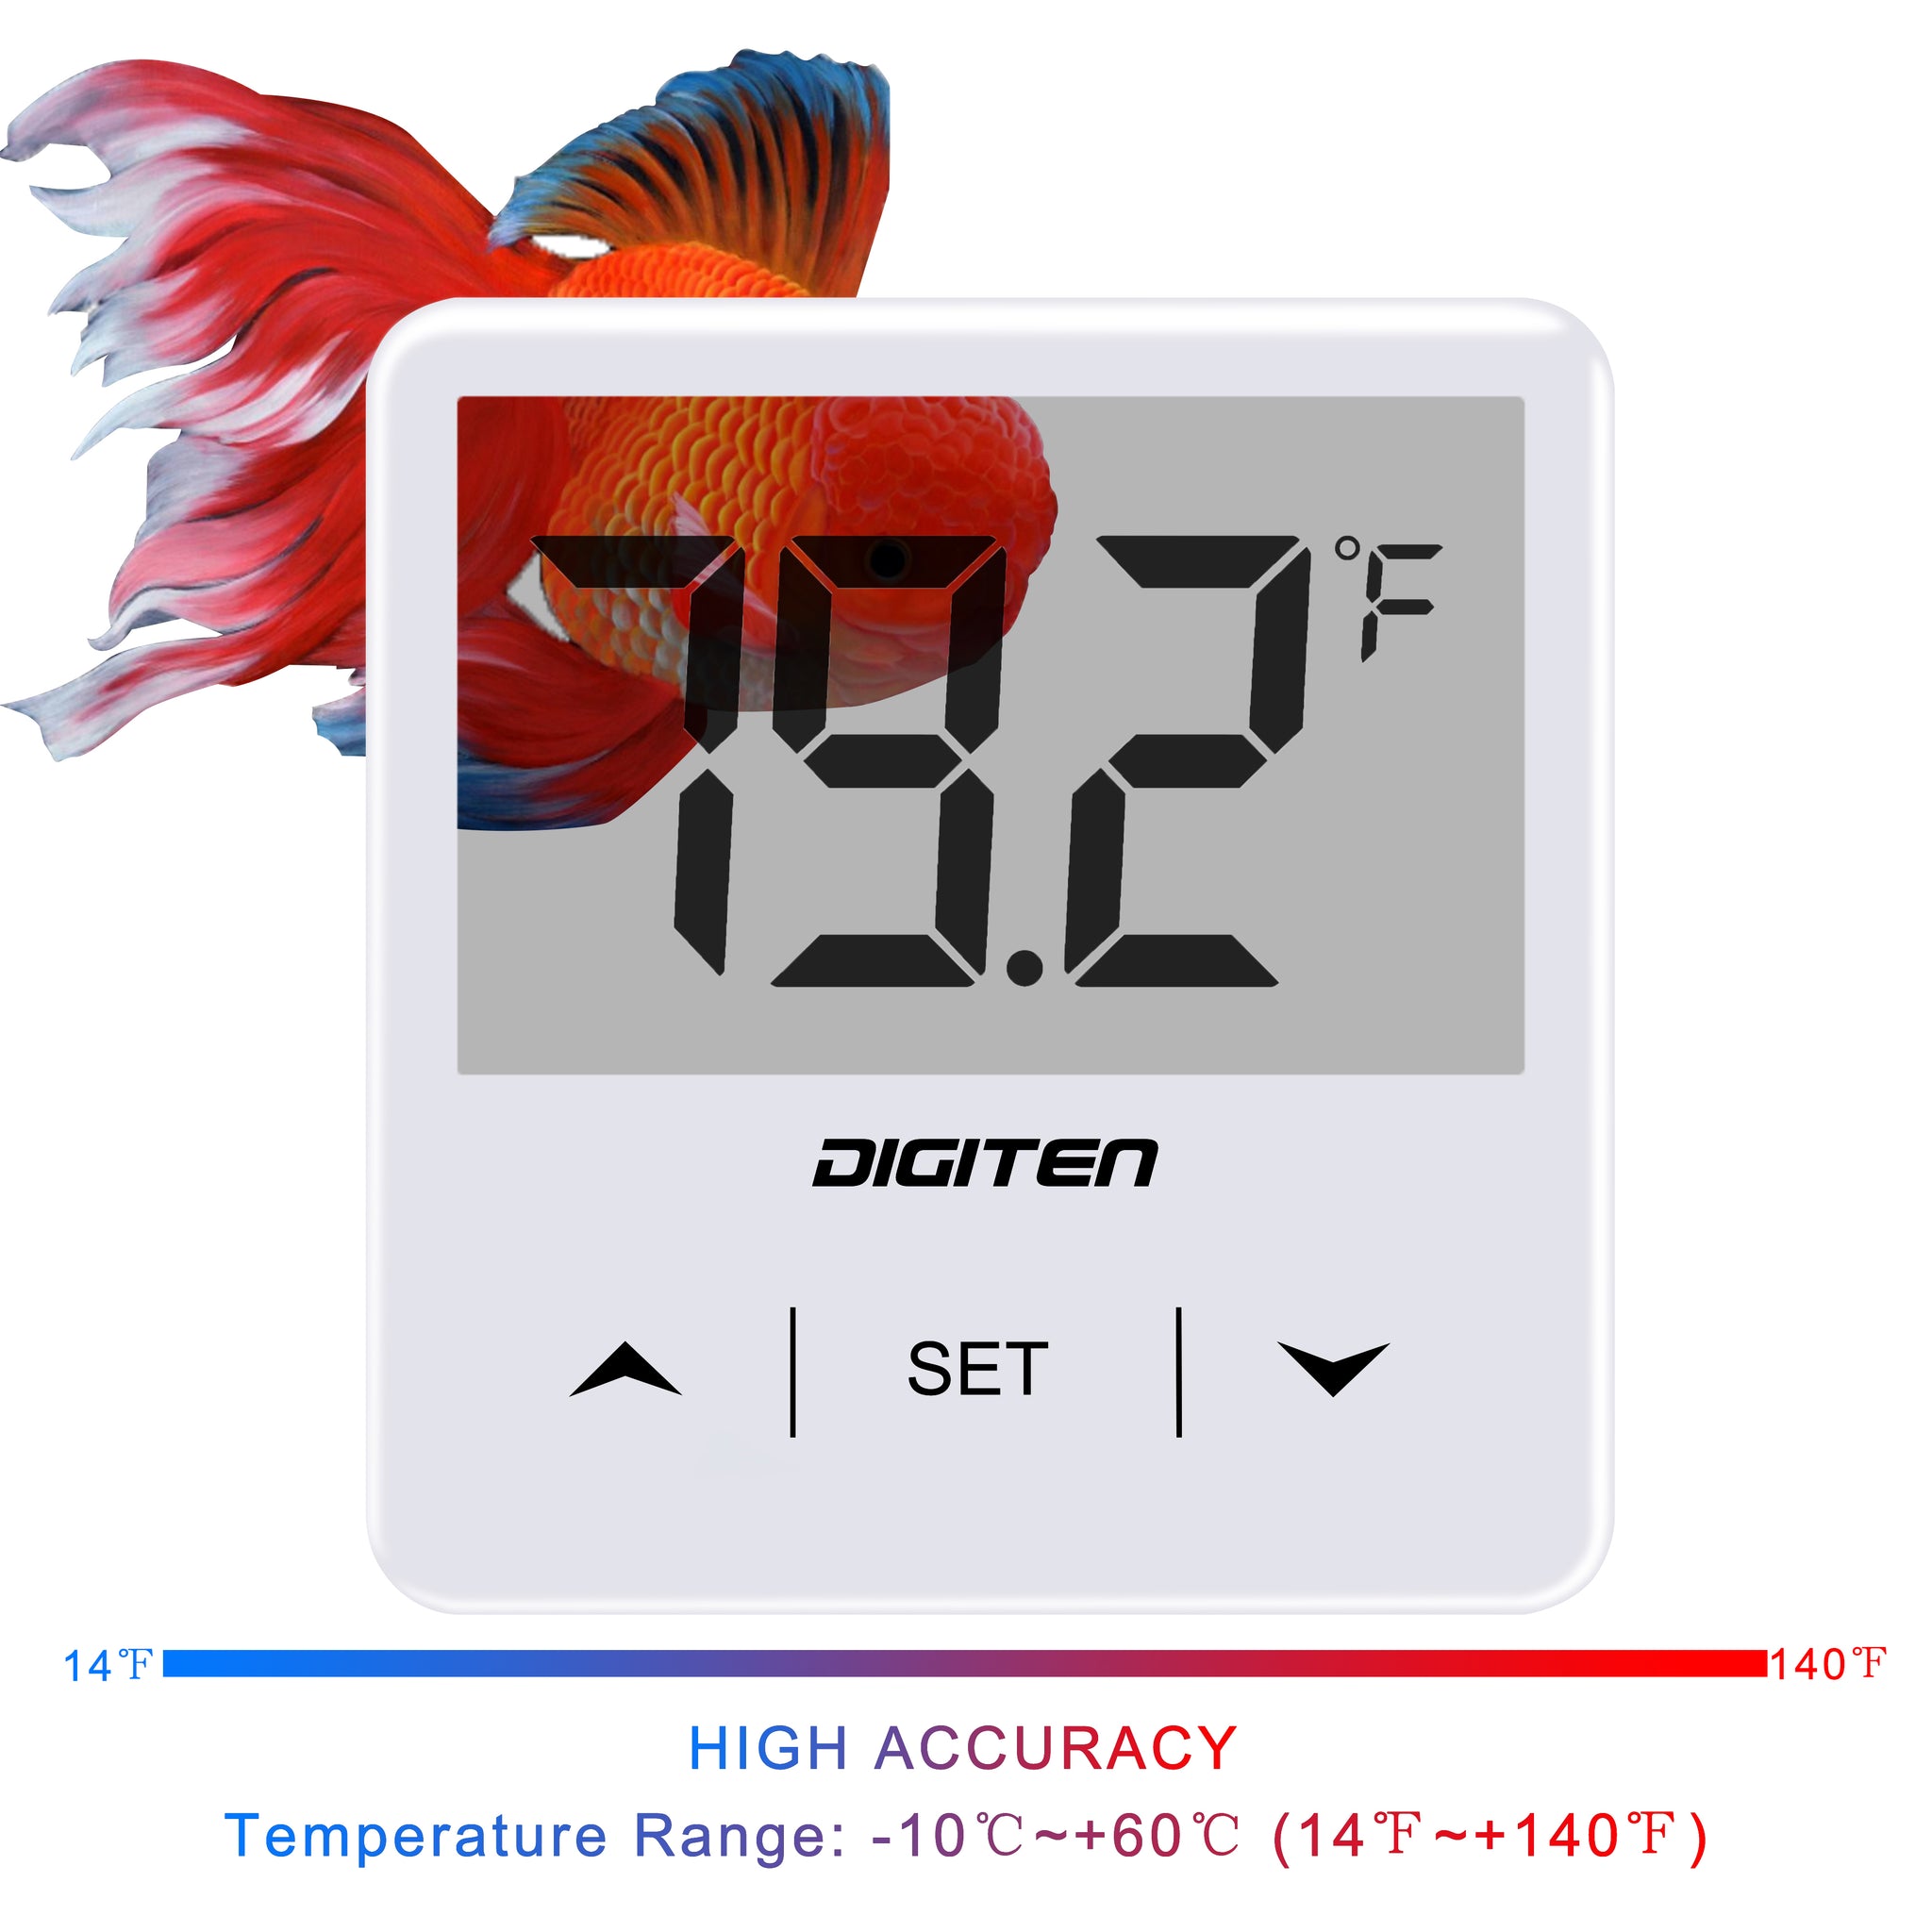  Digital Aquarium Thermometer - LCD Display Fish Tank